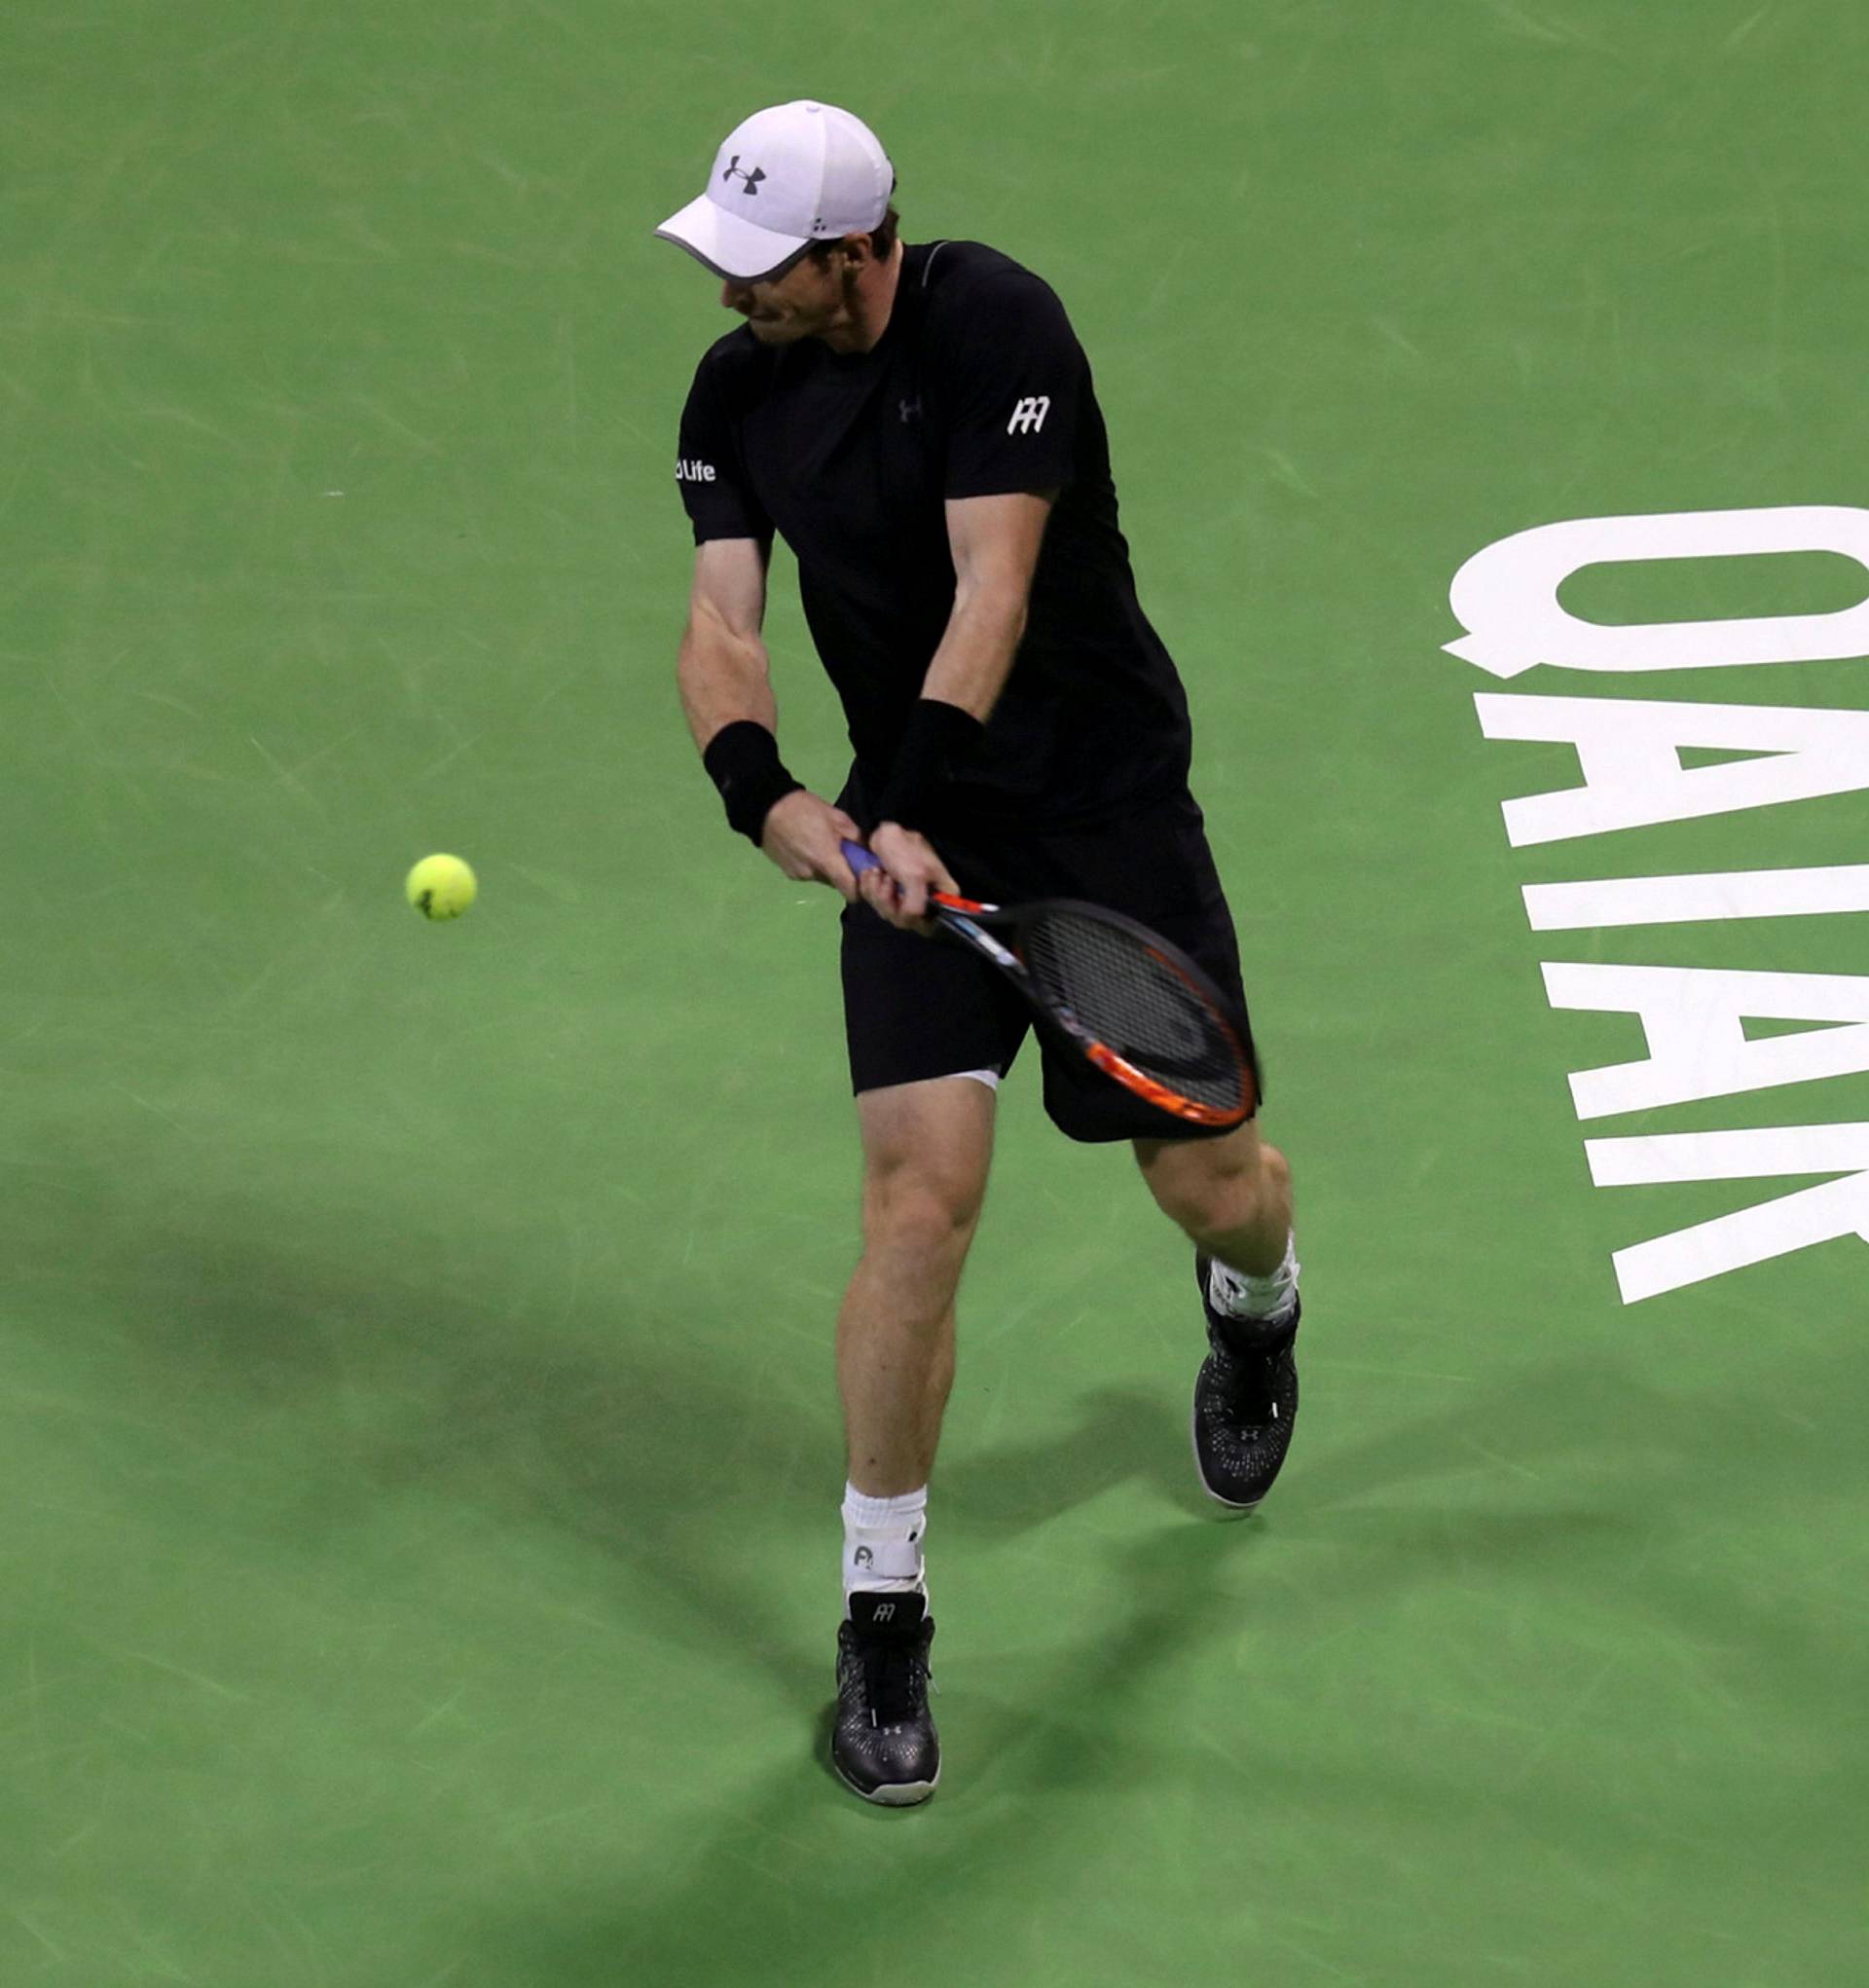 Tennis - Qatar Open - Men's singles semi-finals - Andy Murray of Britain v Tomas Berdych of Czech Republic